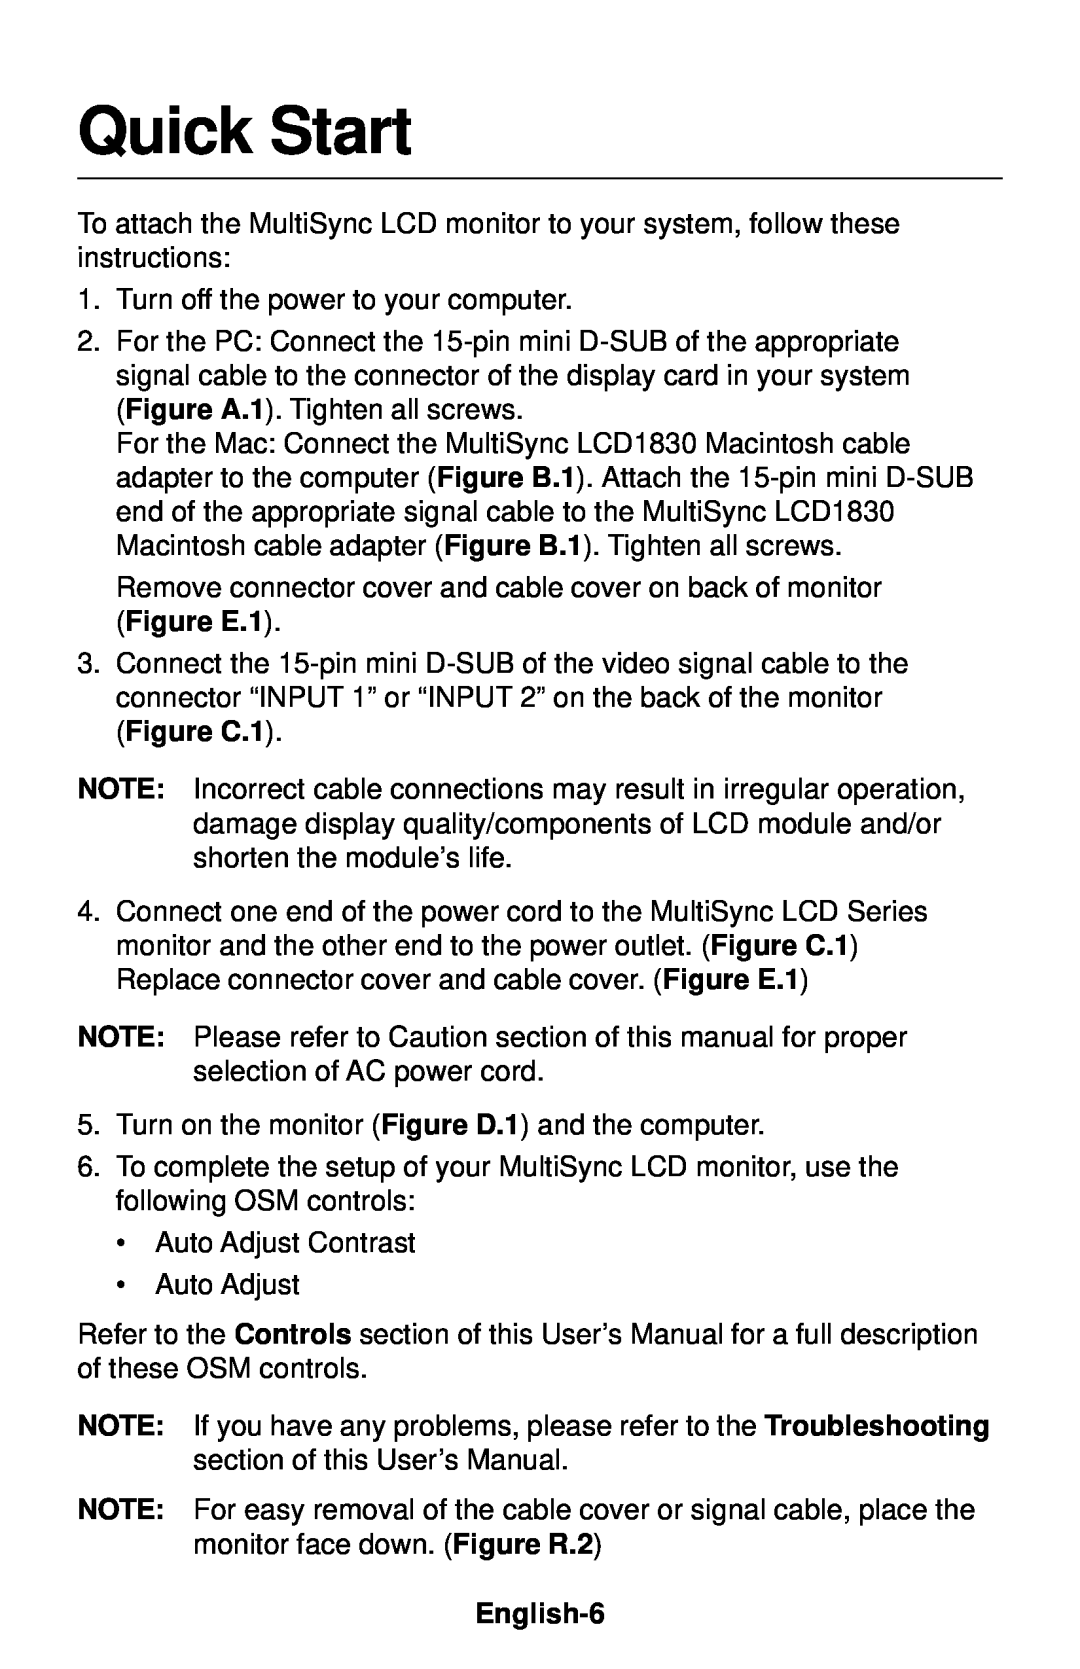 NEC LCD1830 user manual Quick Start, English-6 